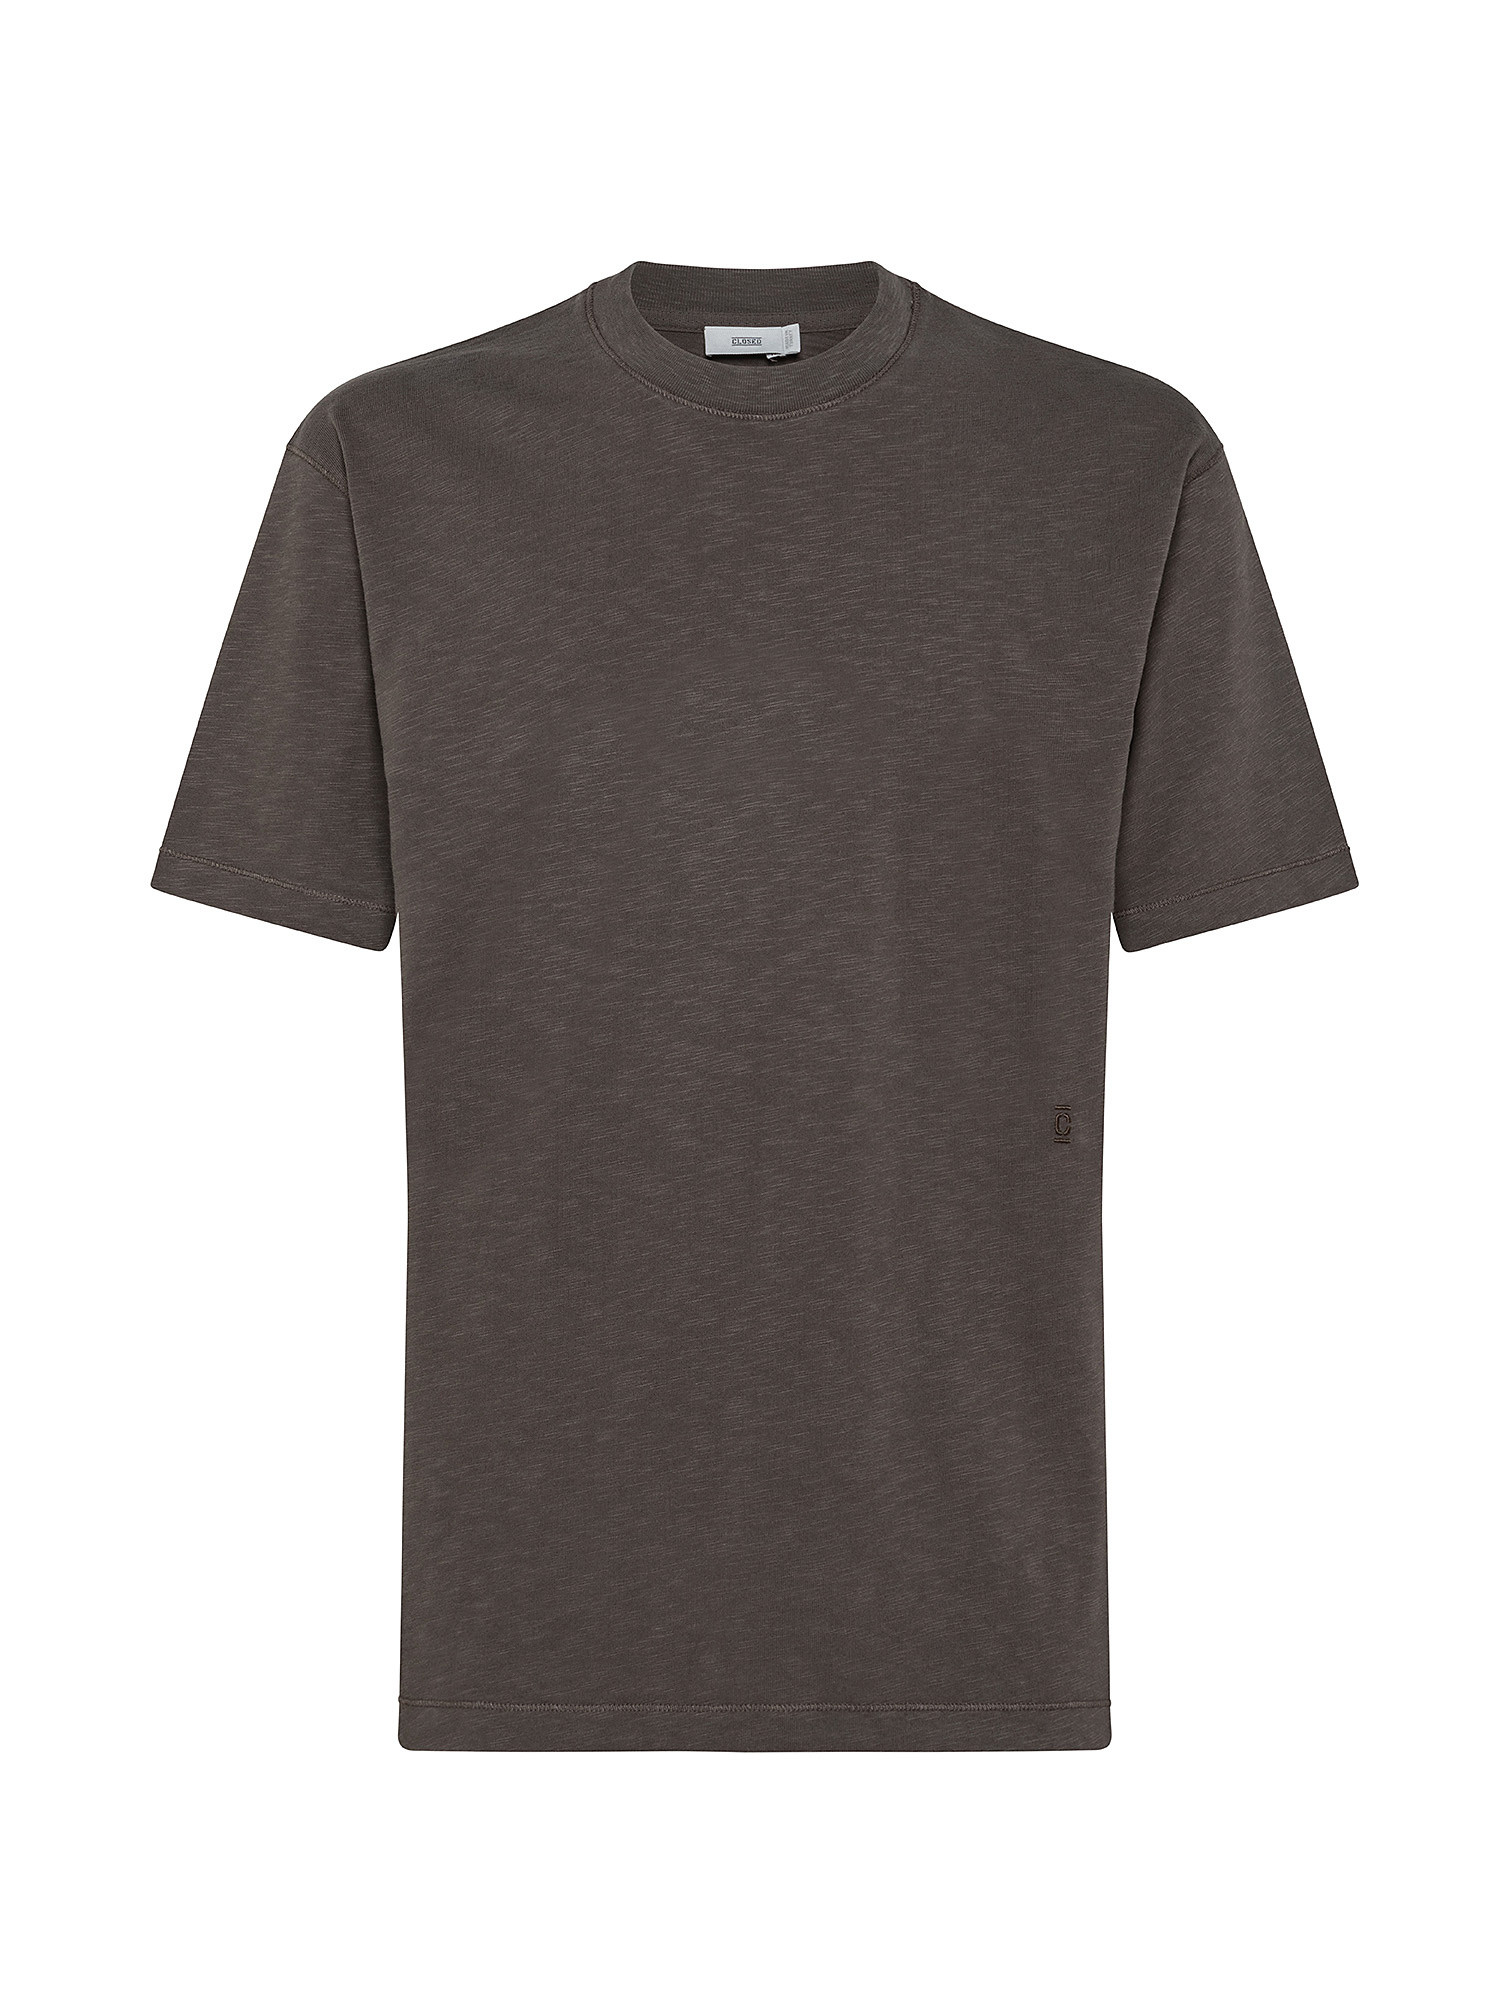 Soft T-Shirt, Grey, large image number 0